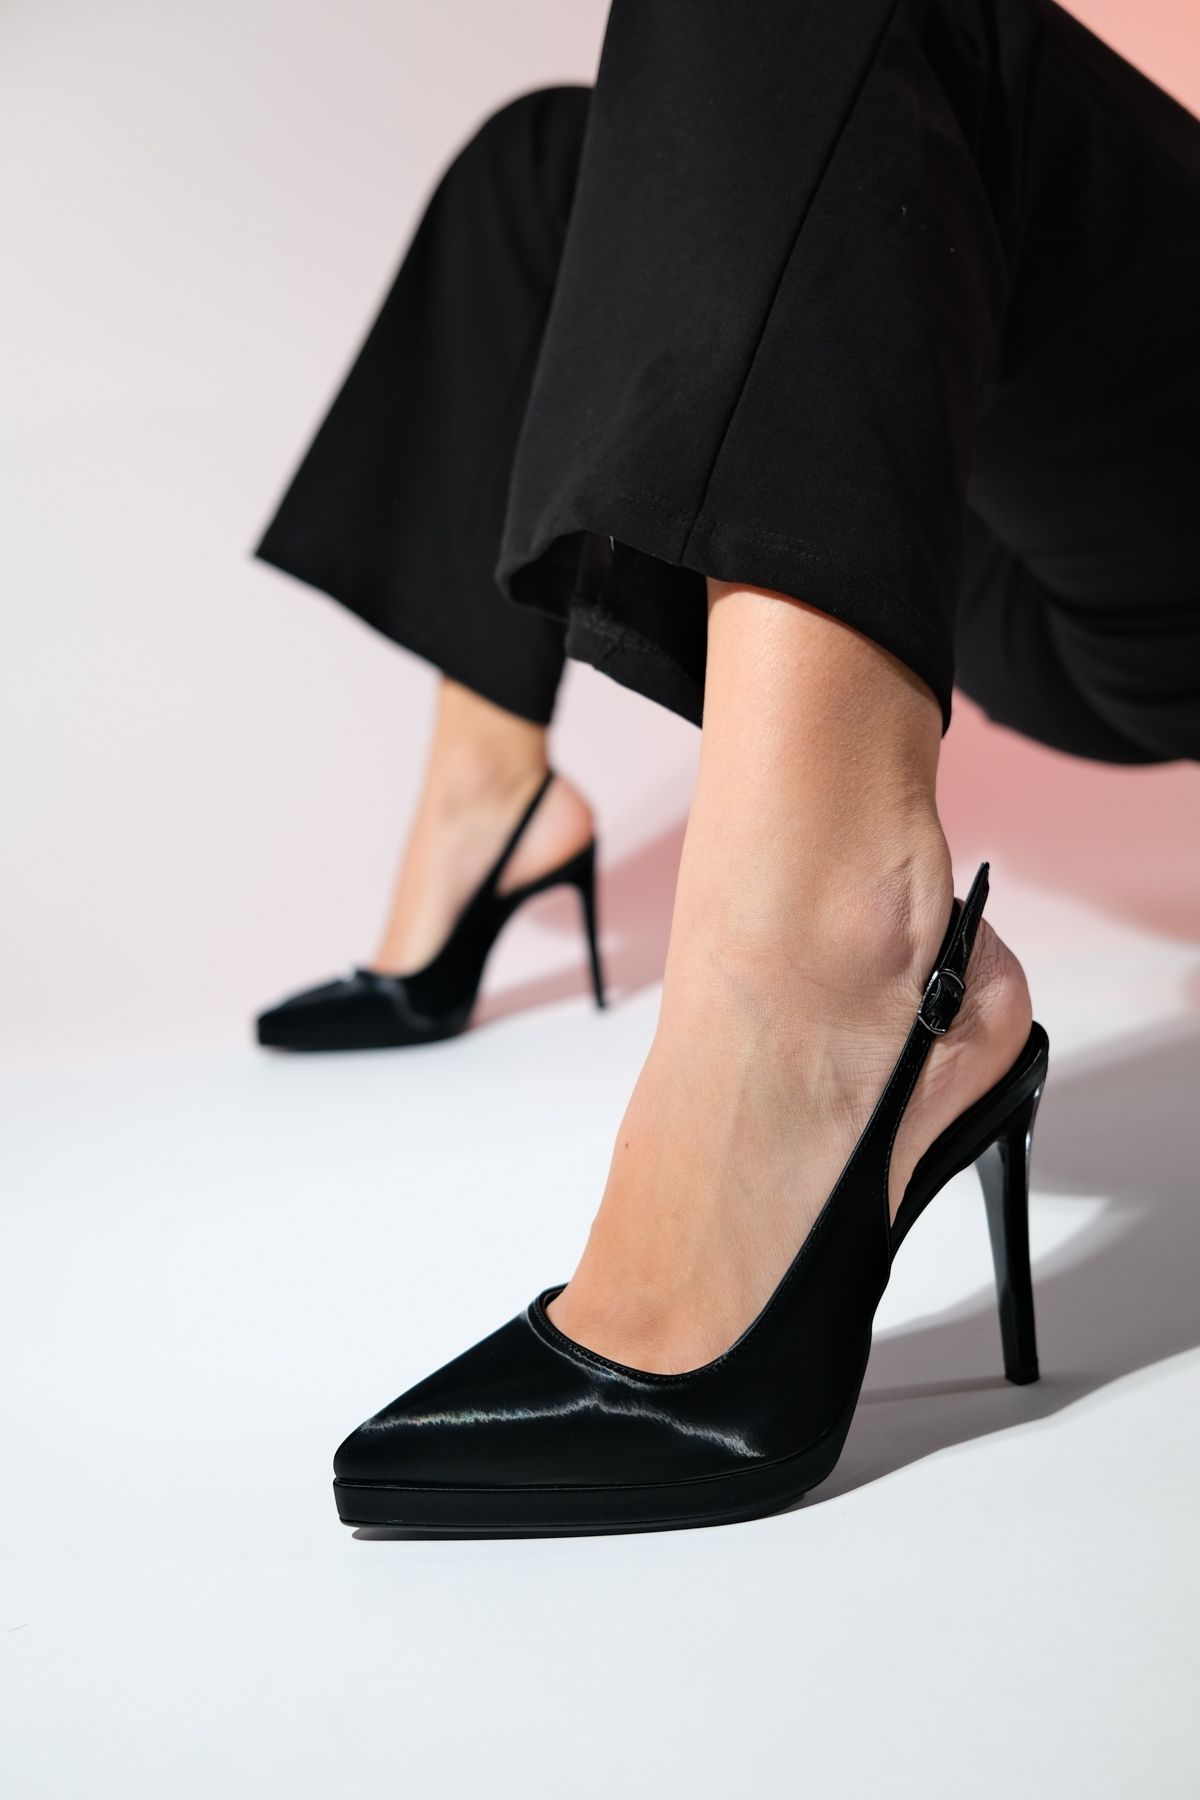 luvishoes SANTA Siyah Kadın Sivri Burun Platform Topuklu Ayakkabı